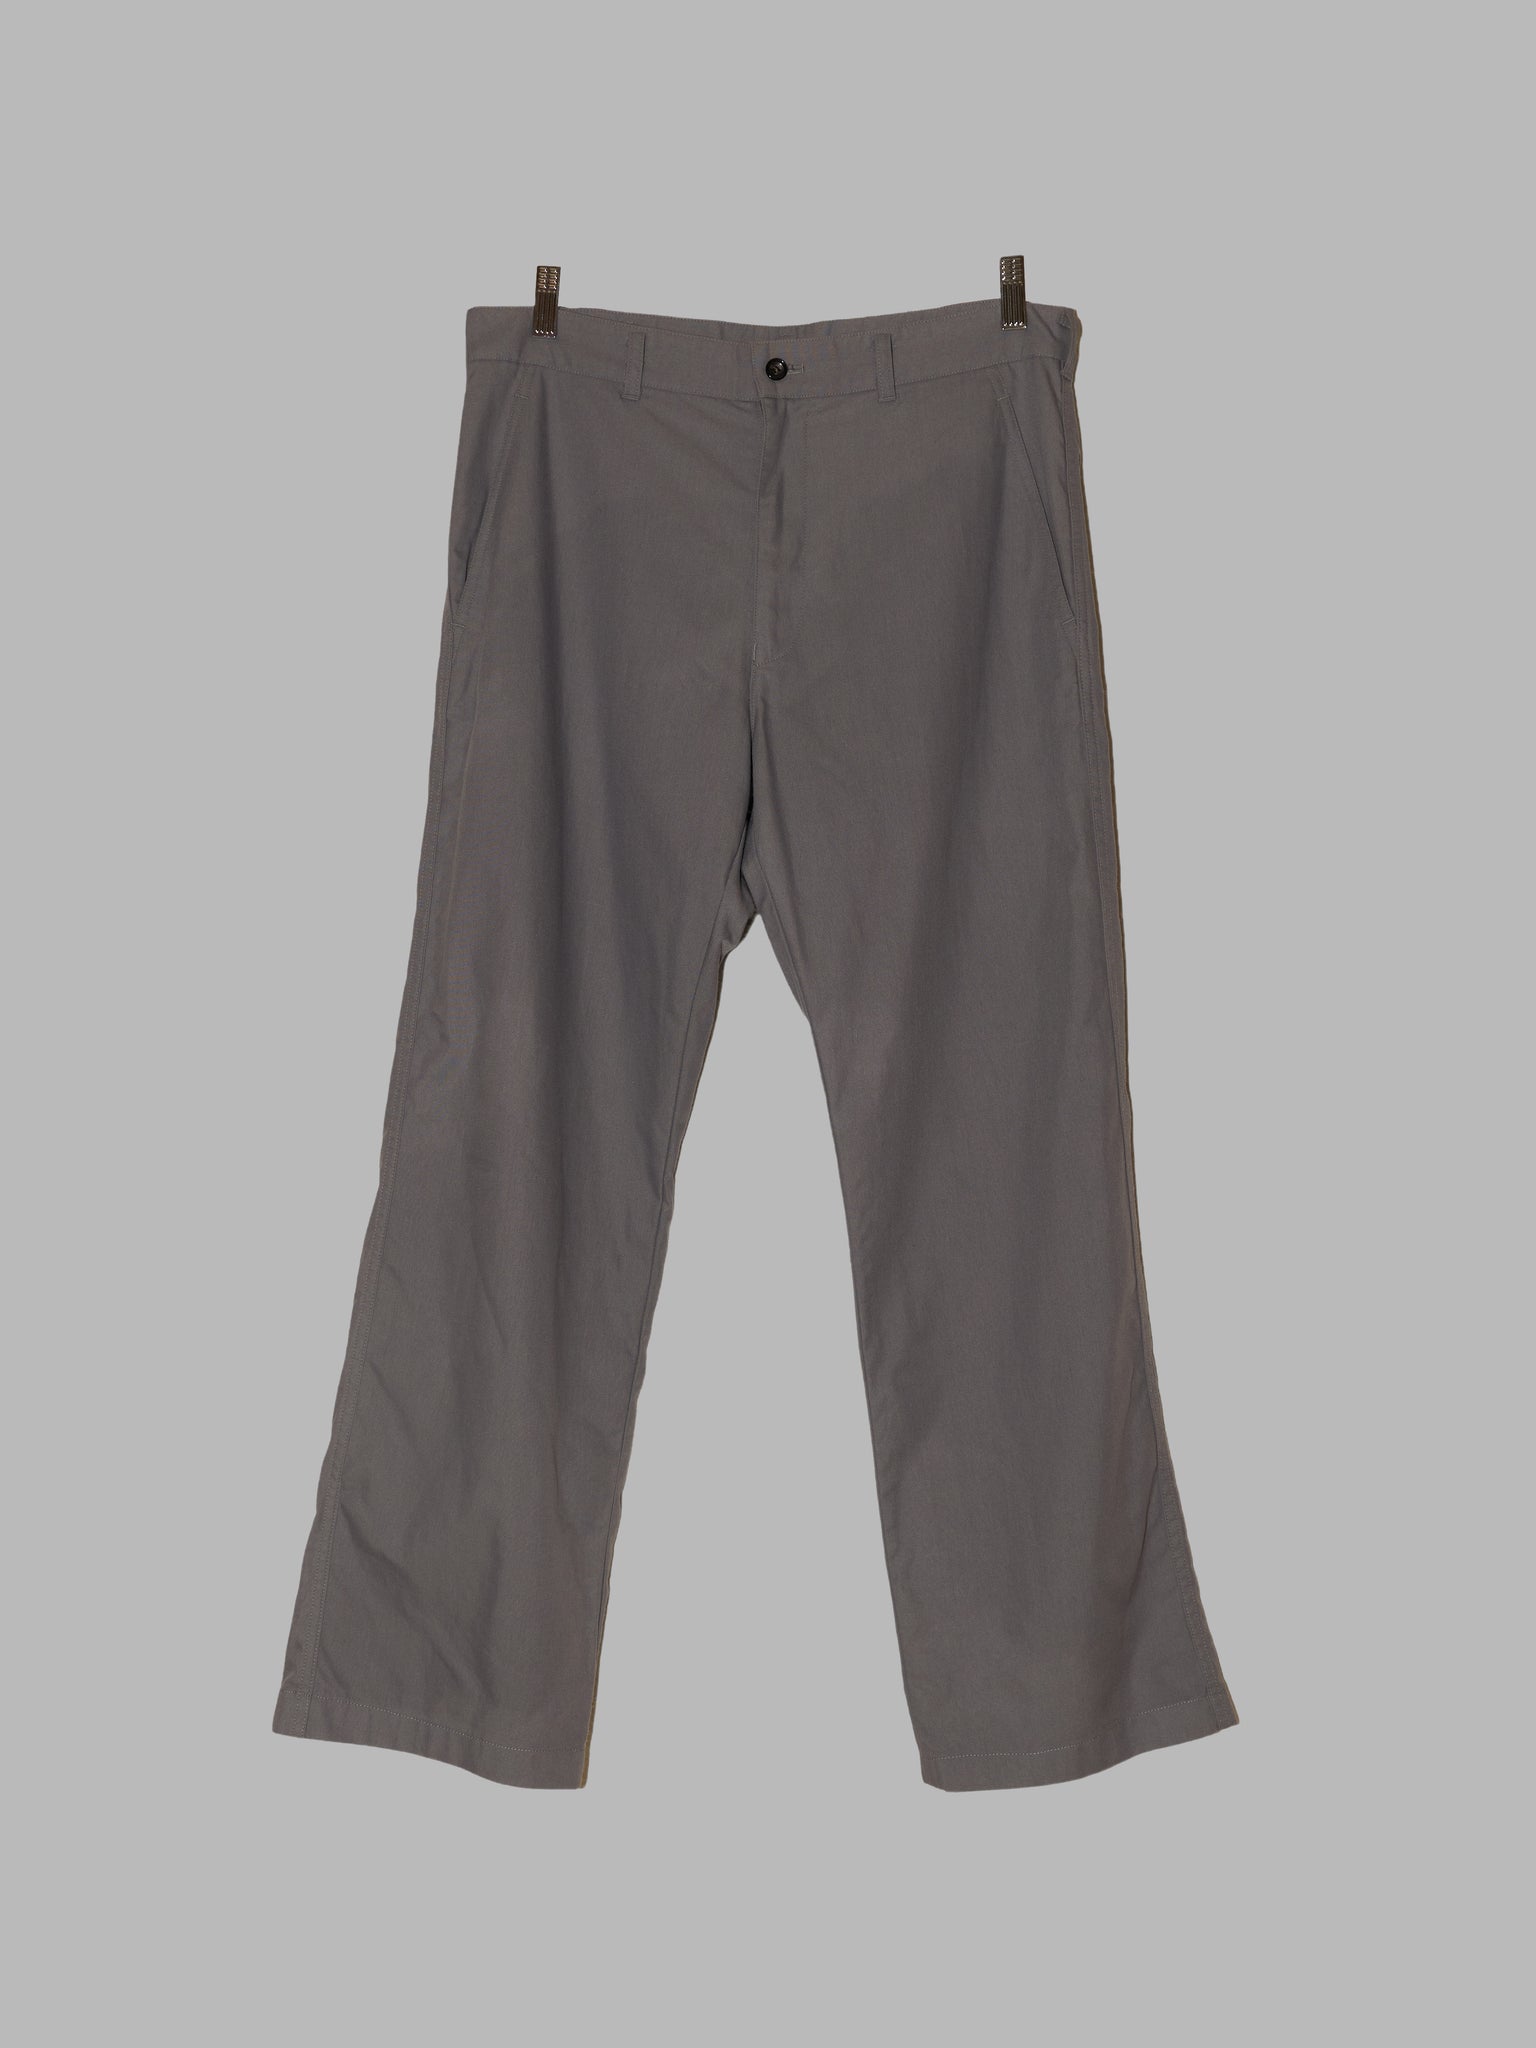 Comme des Garcons Homme 1999 grey nylon straight leg trousers - S